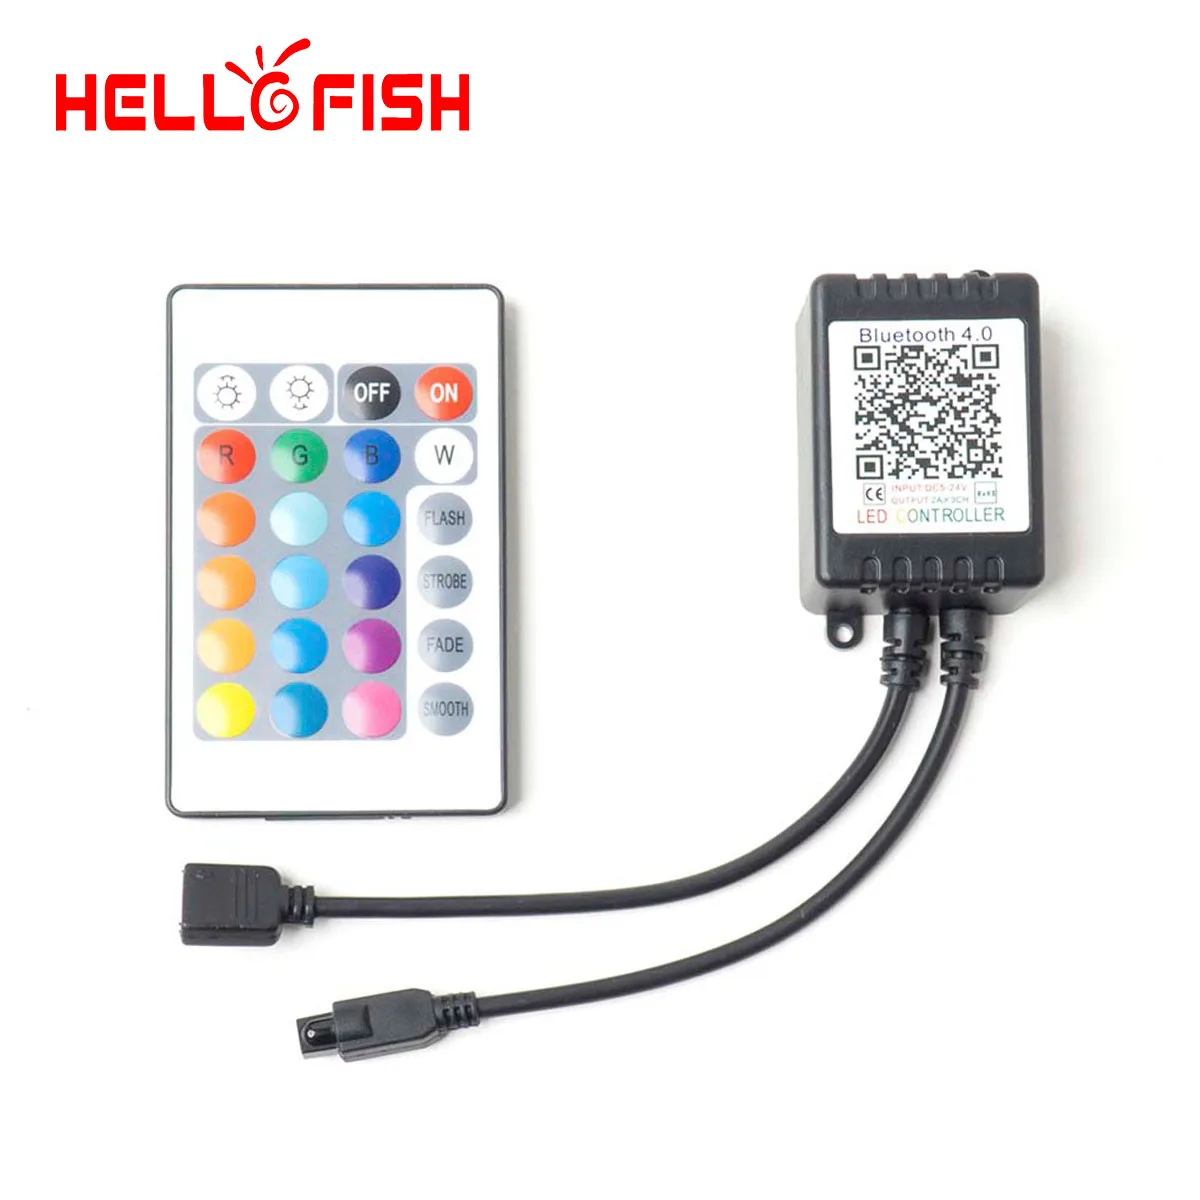 Hello Fish DC12V 6A Bluetooth RGB Контроллер для 3528 5050 светодиодных лент, совместимый с IOS 6.0 и Android 4.0